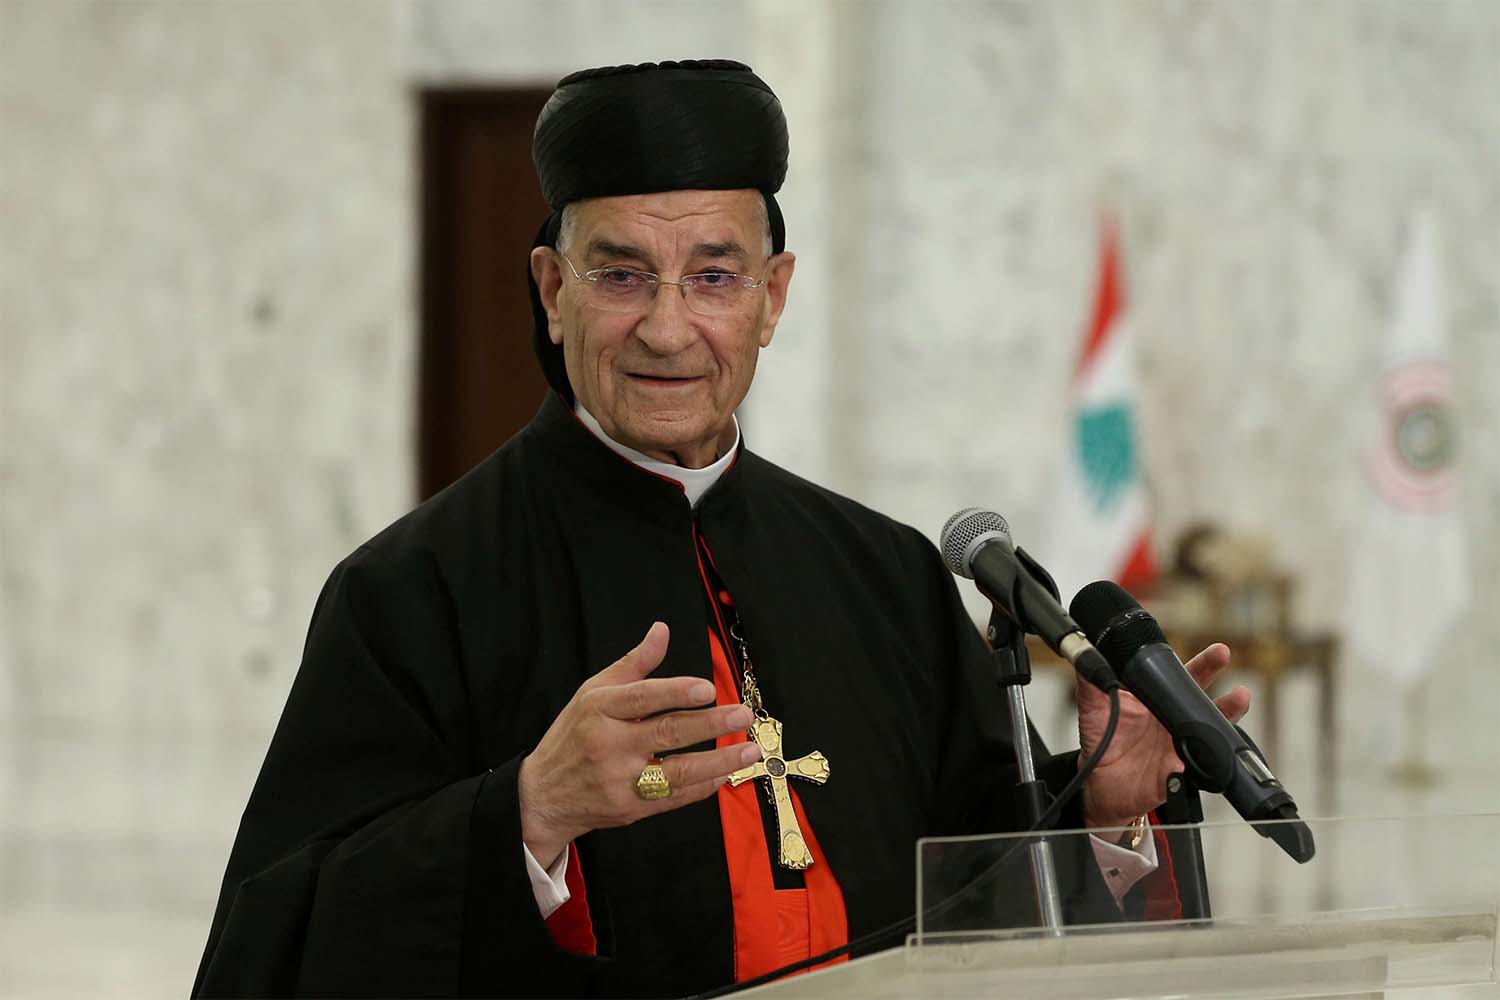 Maronite Patriarch Bechara Boutros Al-Rai